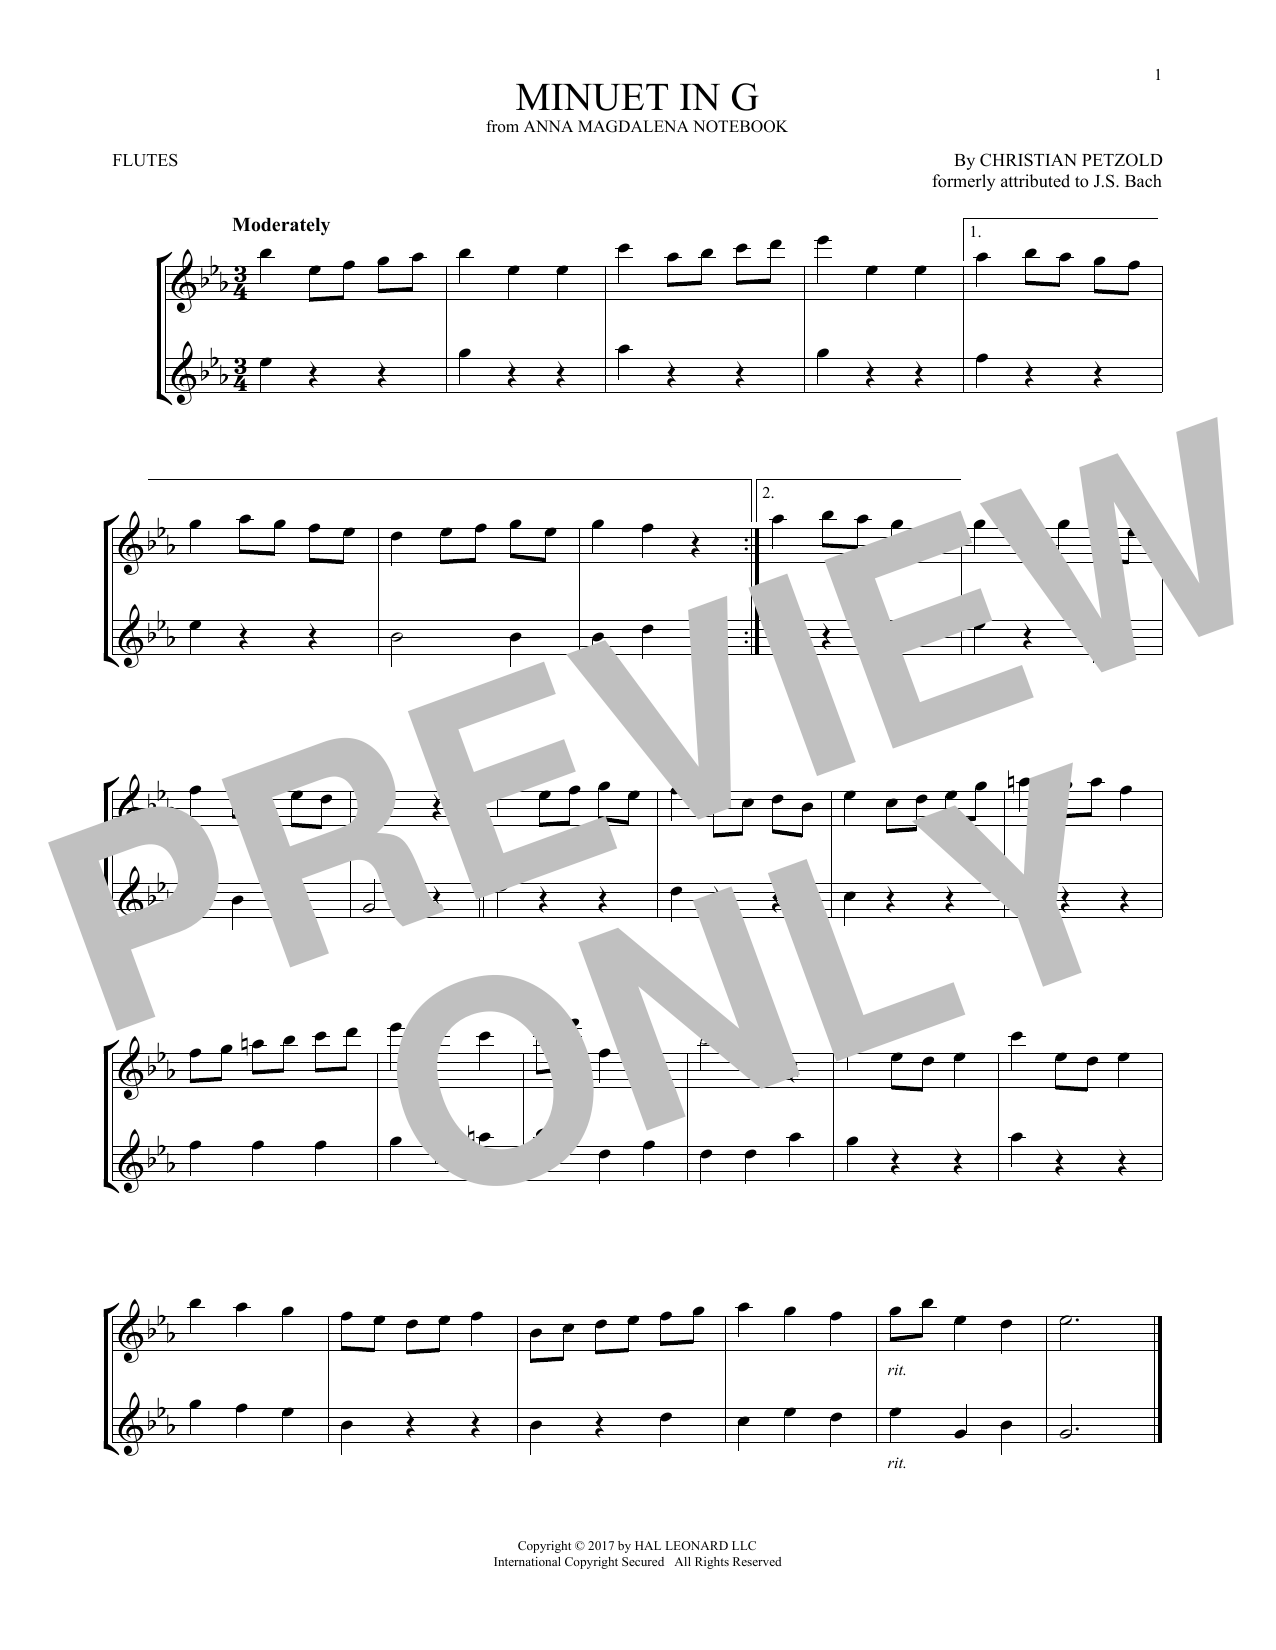 Christian Petzold Minuet In G Major, BWV Anh. 114 sheet music notes printable PDF score